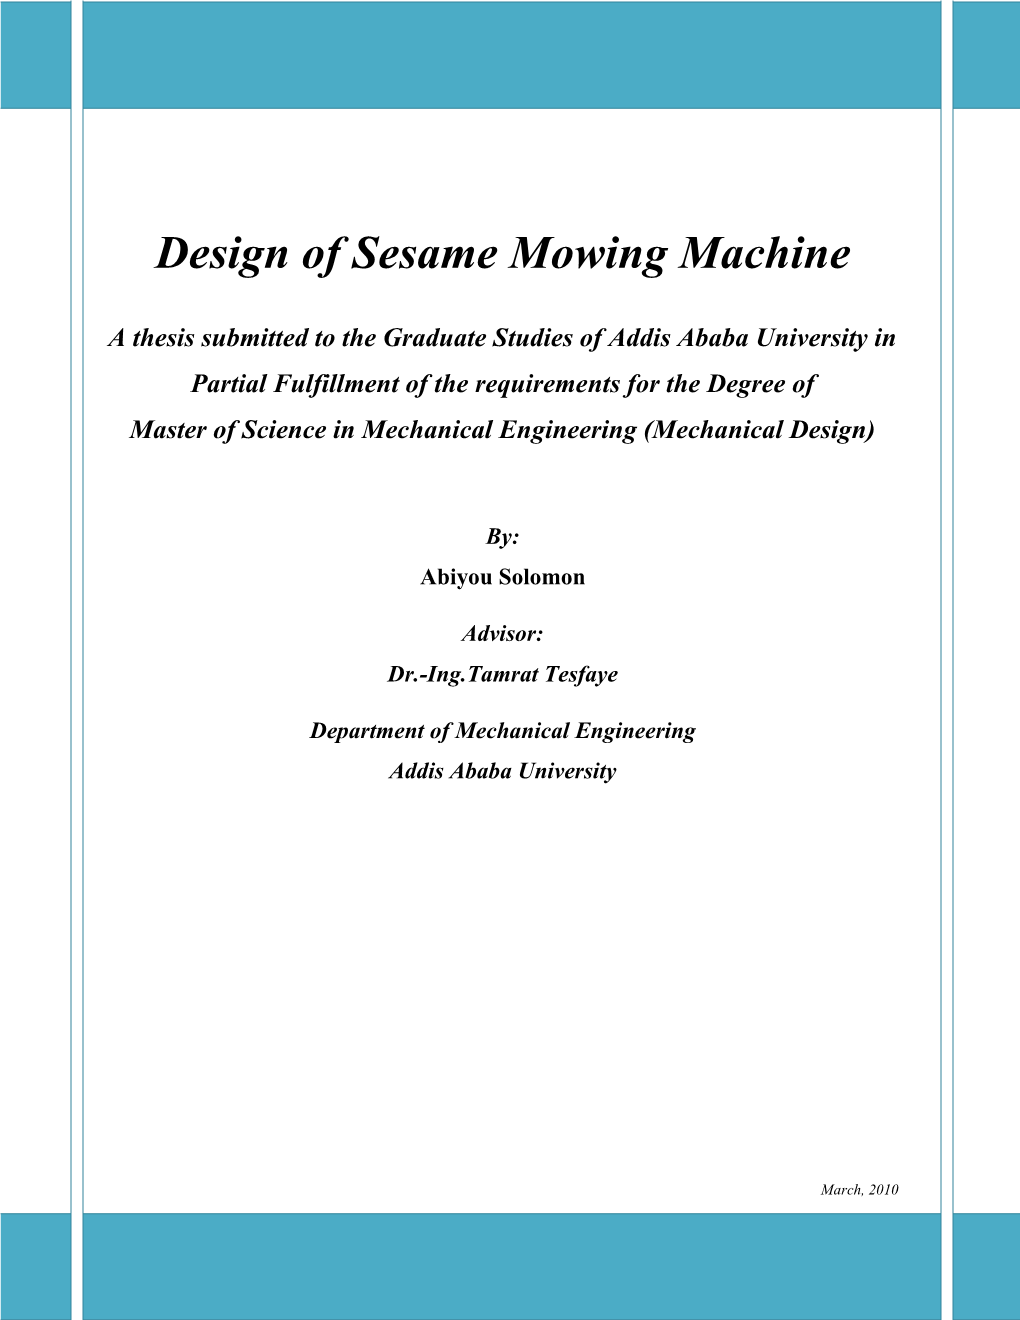 Design of Sesame Mowing Machine